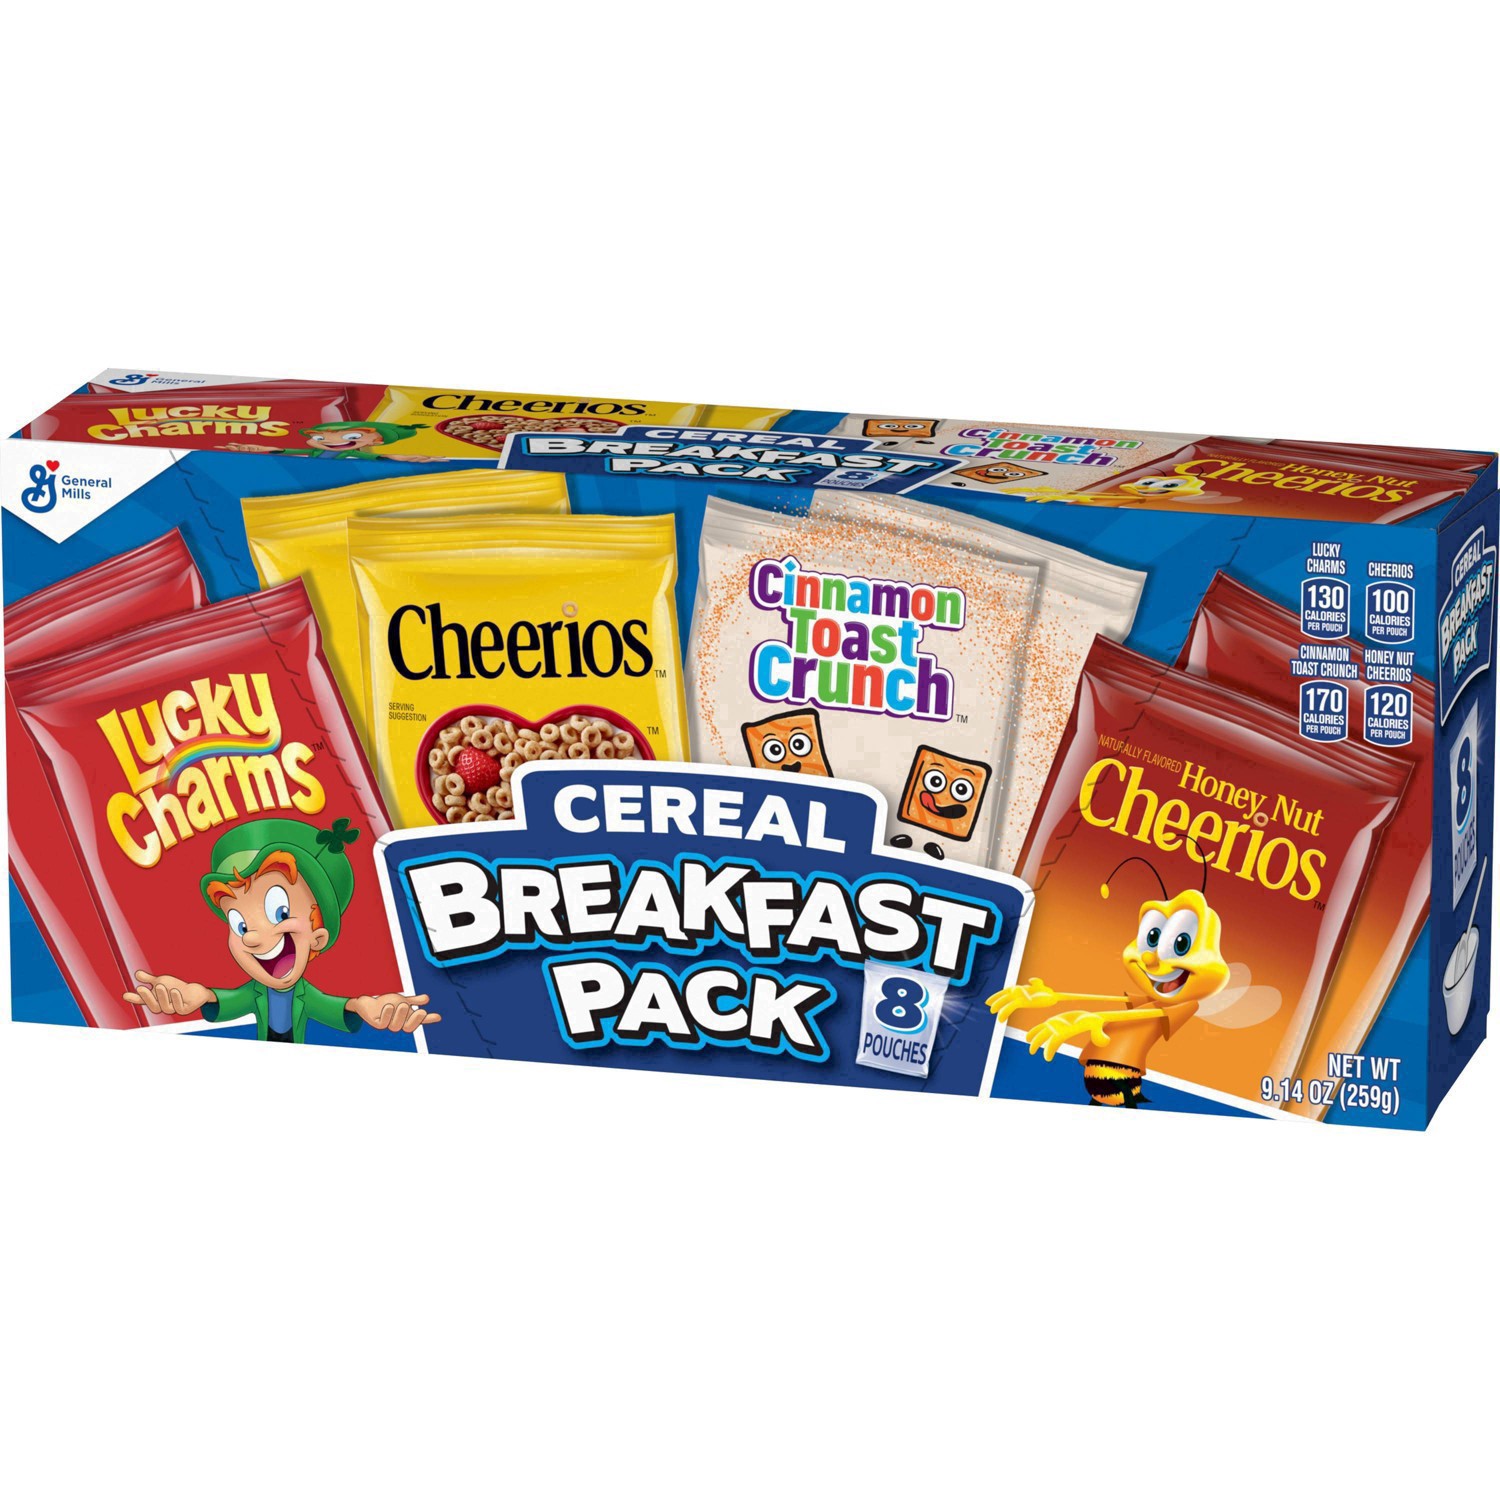 slide 66 of 141, General Mills Breakfast Pack Cereal, 8 ct